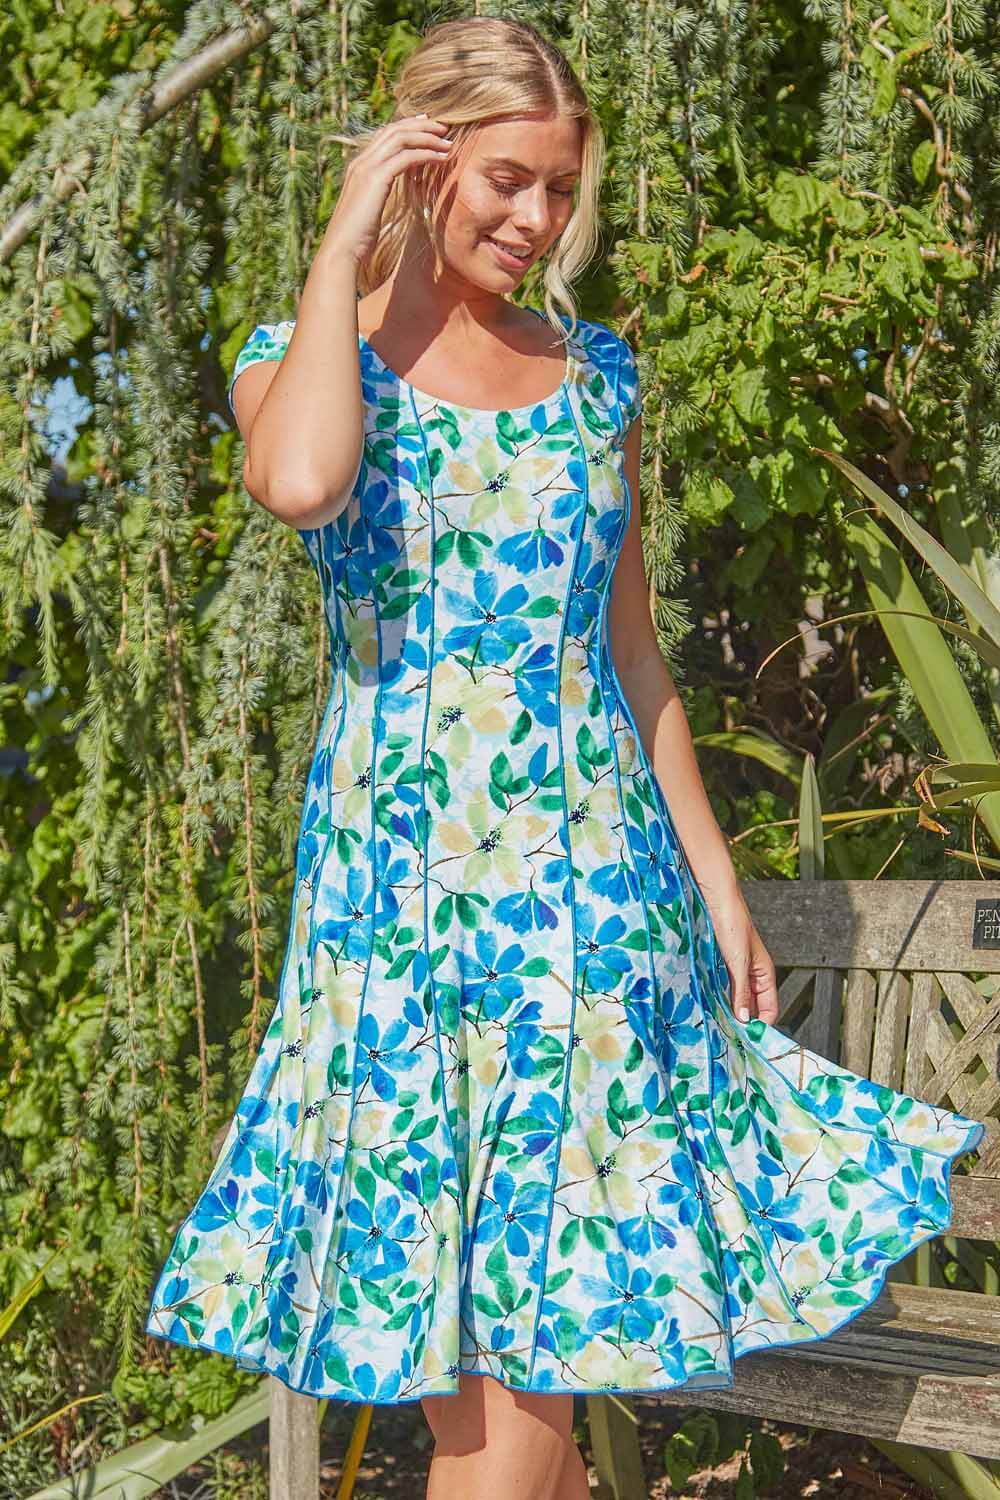 Floral Garden Print Panel Dress in Blue & Green - Roman Originals UK